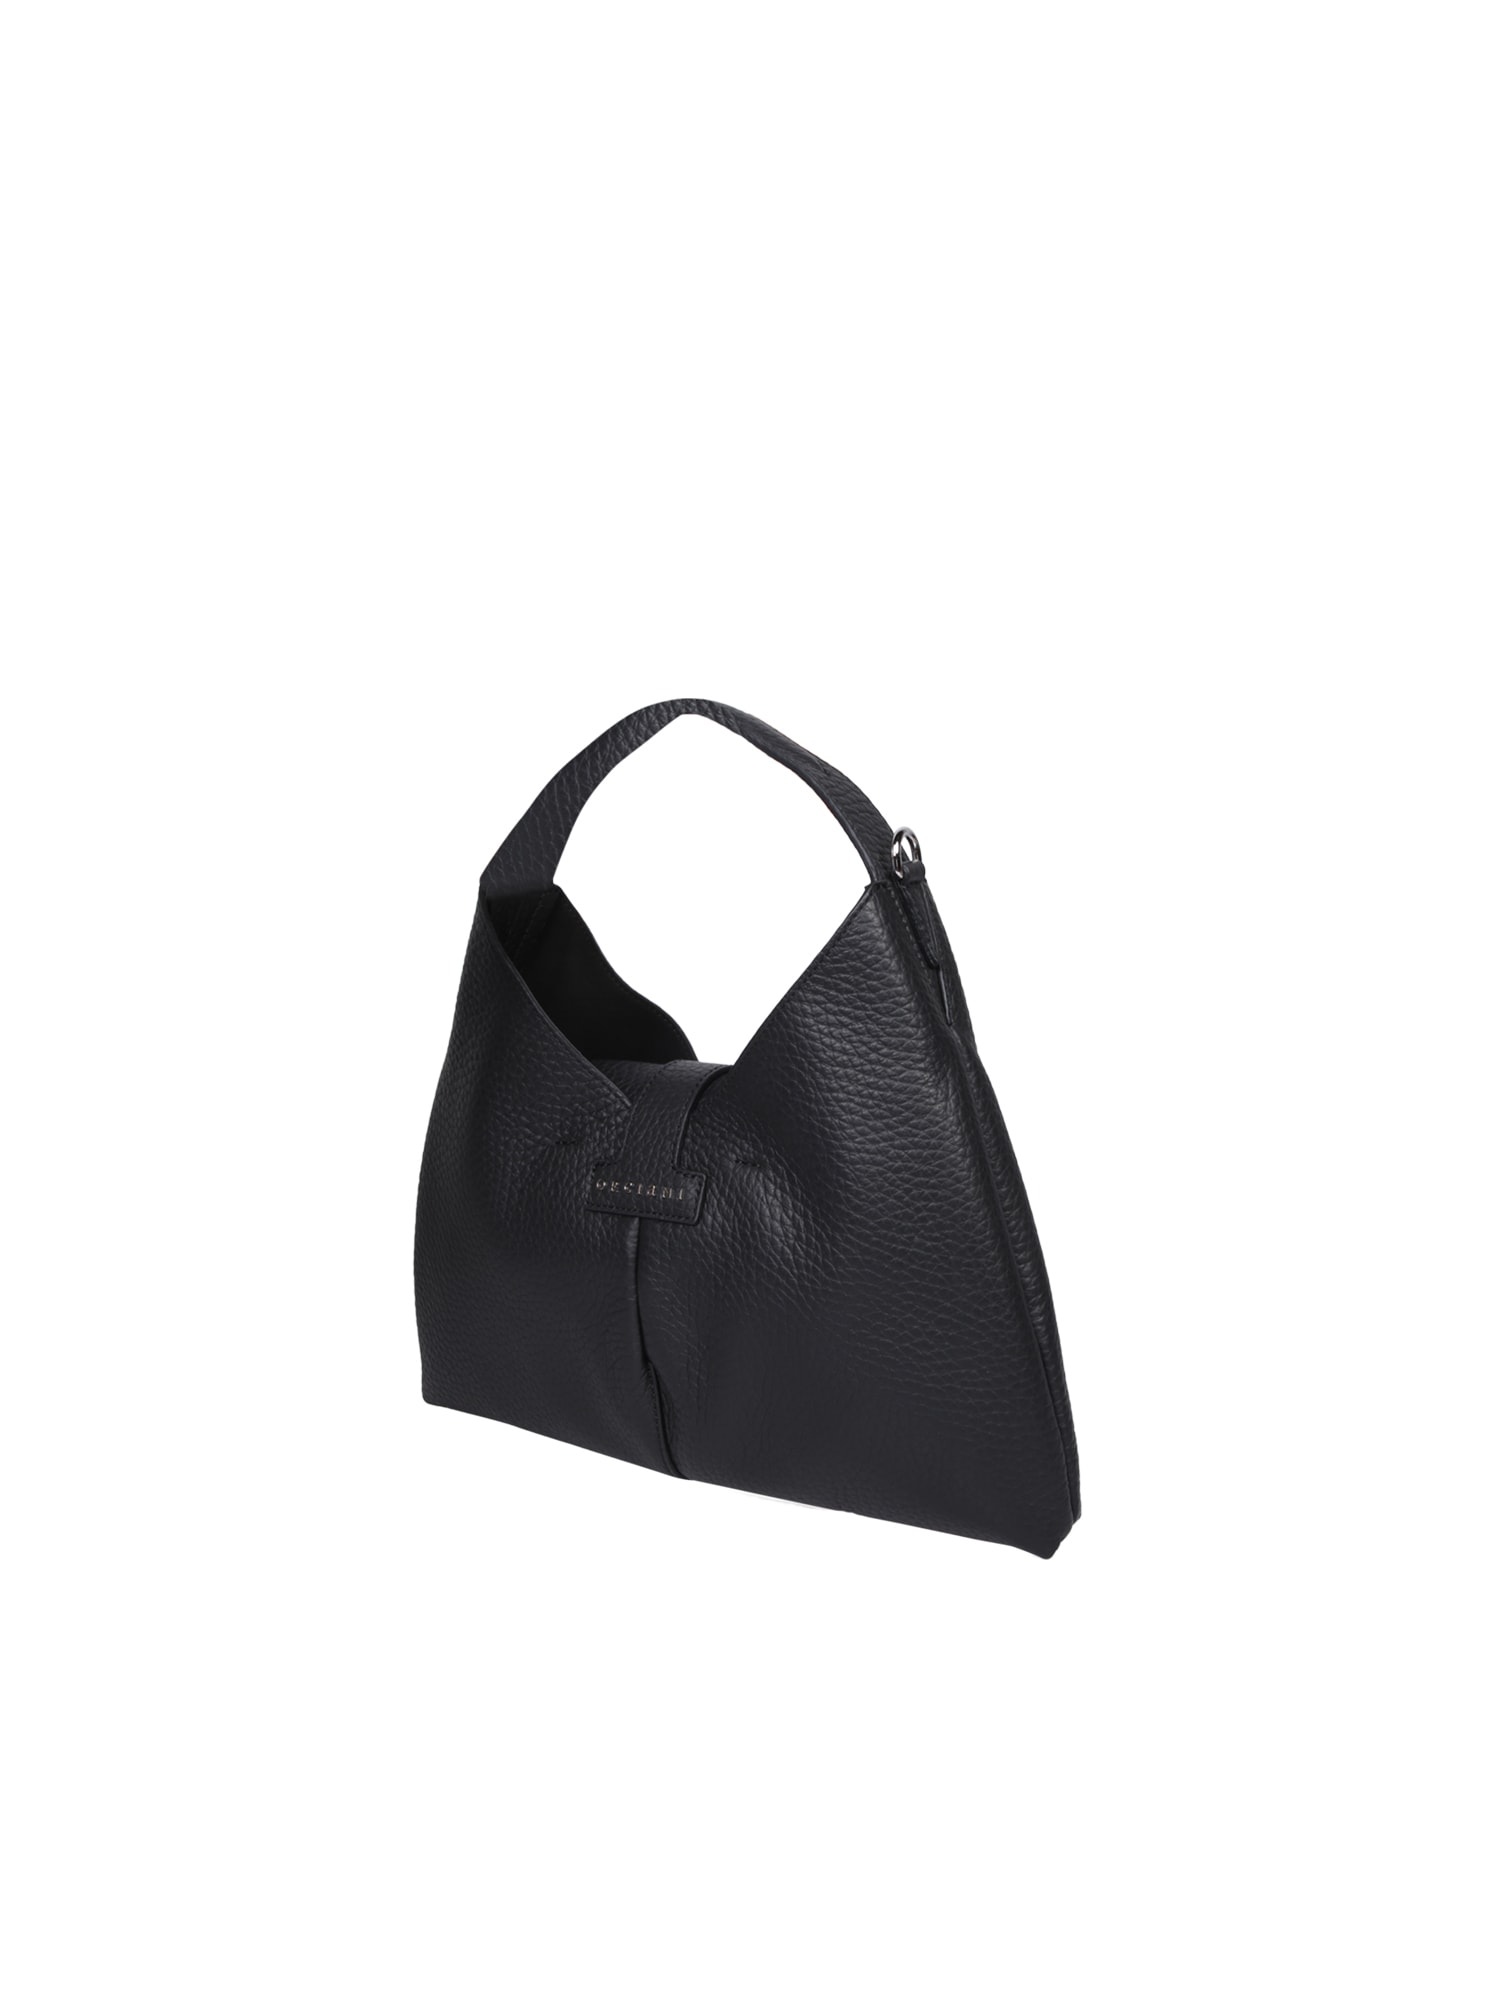 Shop Orciani Vita Soft Small Black Bag